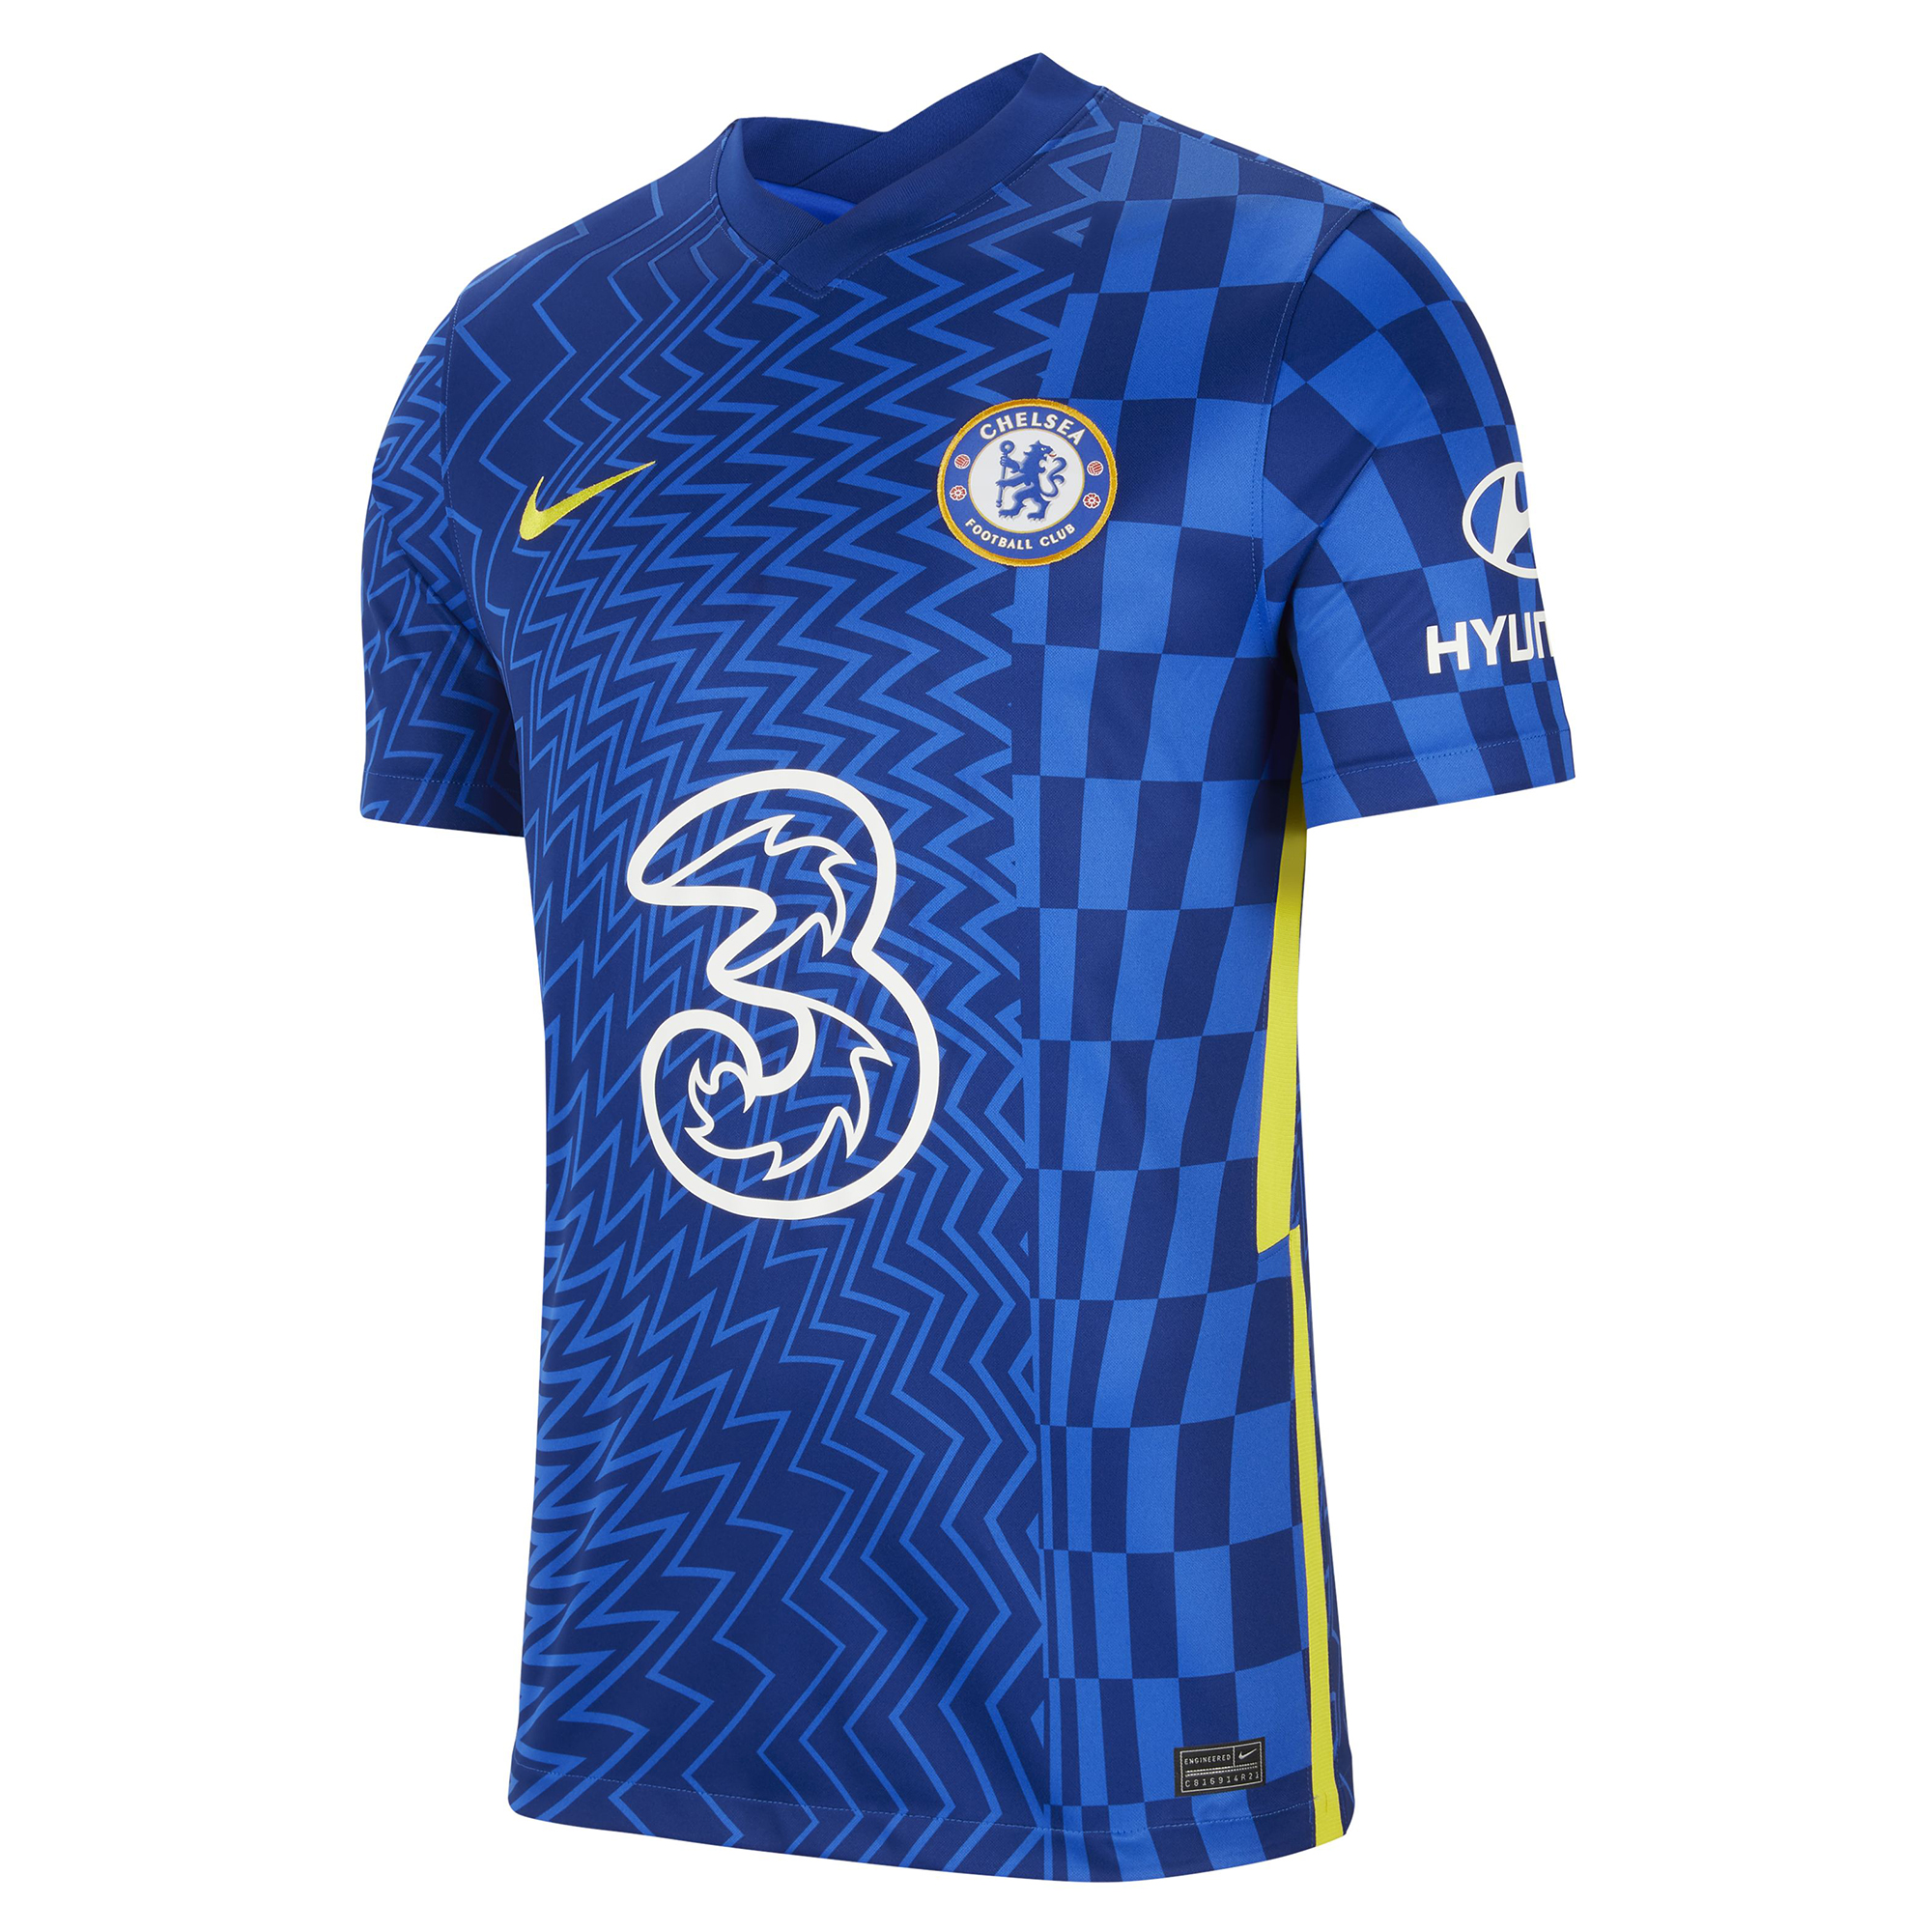 Camiseta Nike Chelsea FC 2021/22 Stadium Home,  image number null